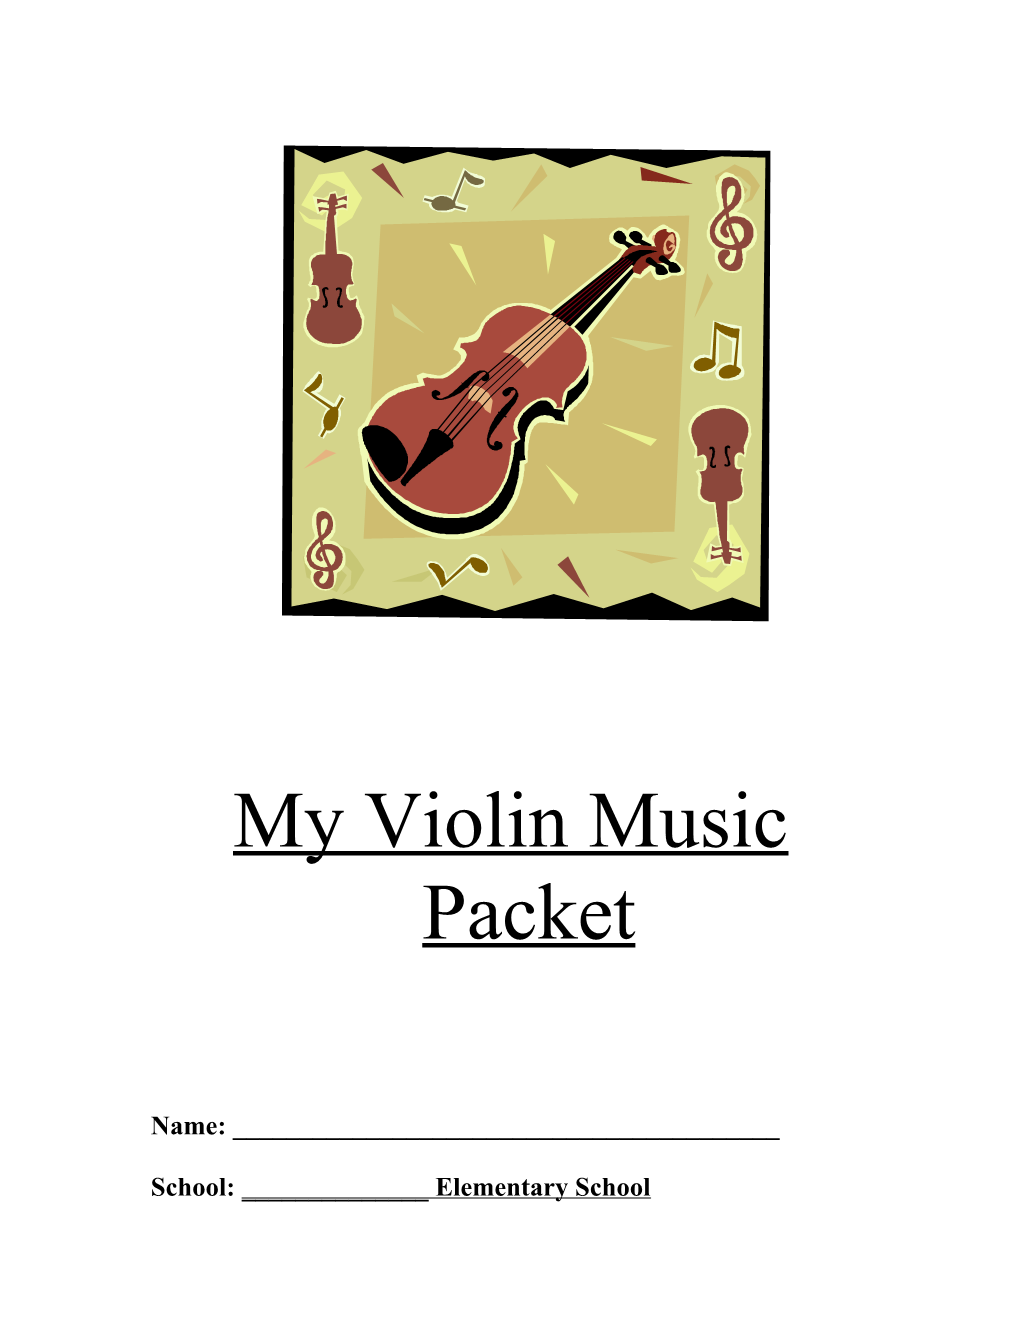 My Violin Music Packet